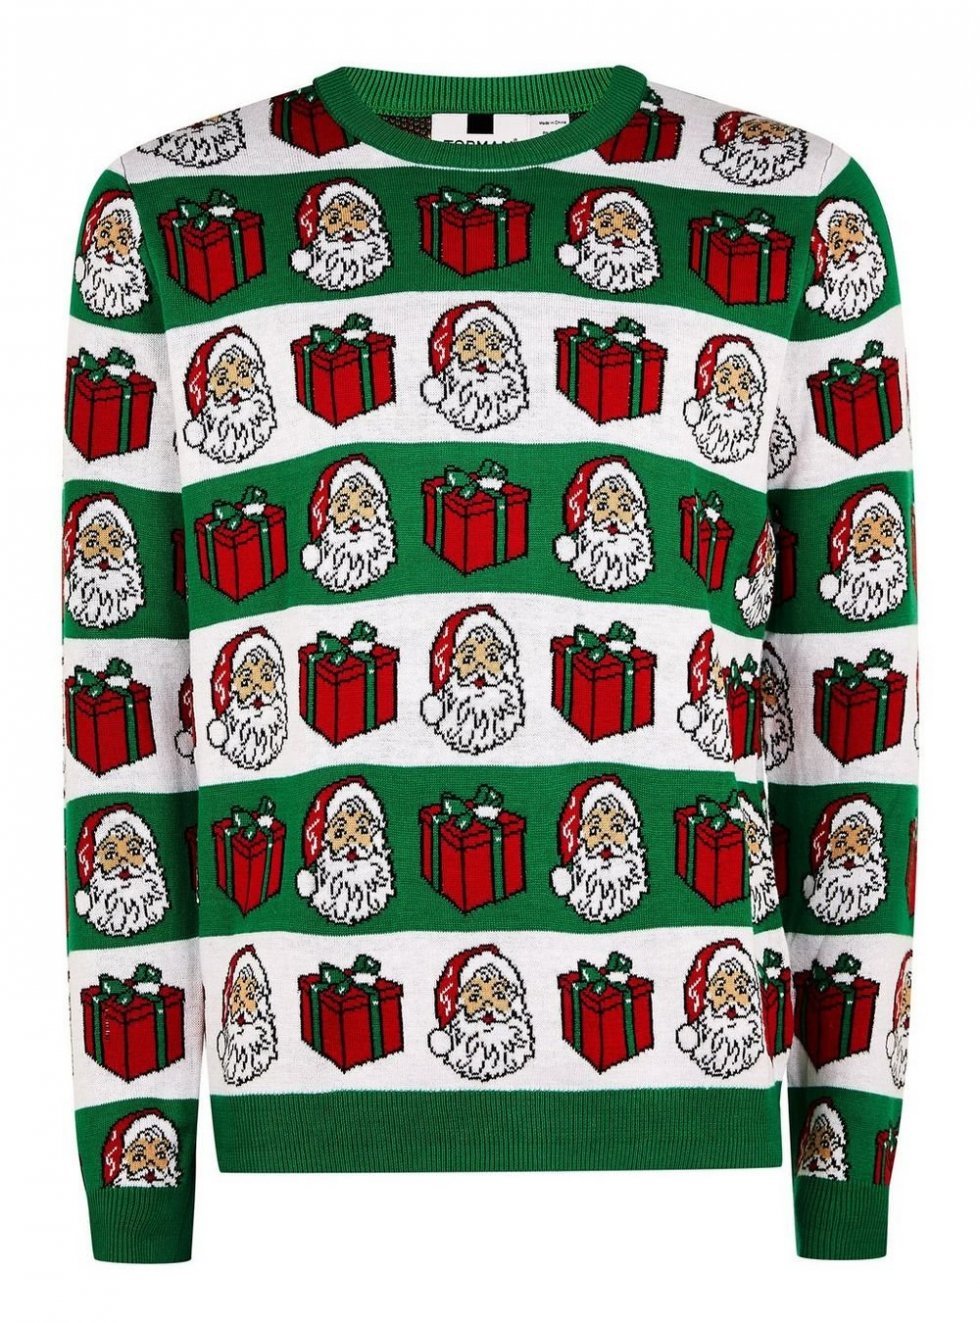 Topman - Christmas Green Block Stripe Santa Jumper, 270 kroner.  - Klar til julefrokost: 25 (grimme) juletrøjer 